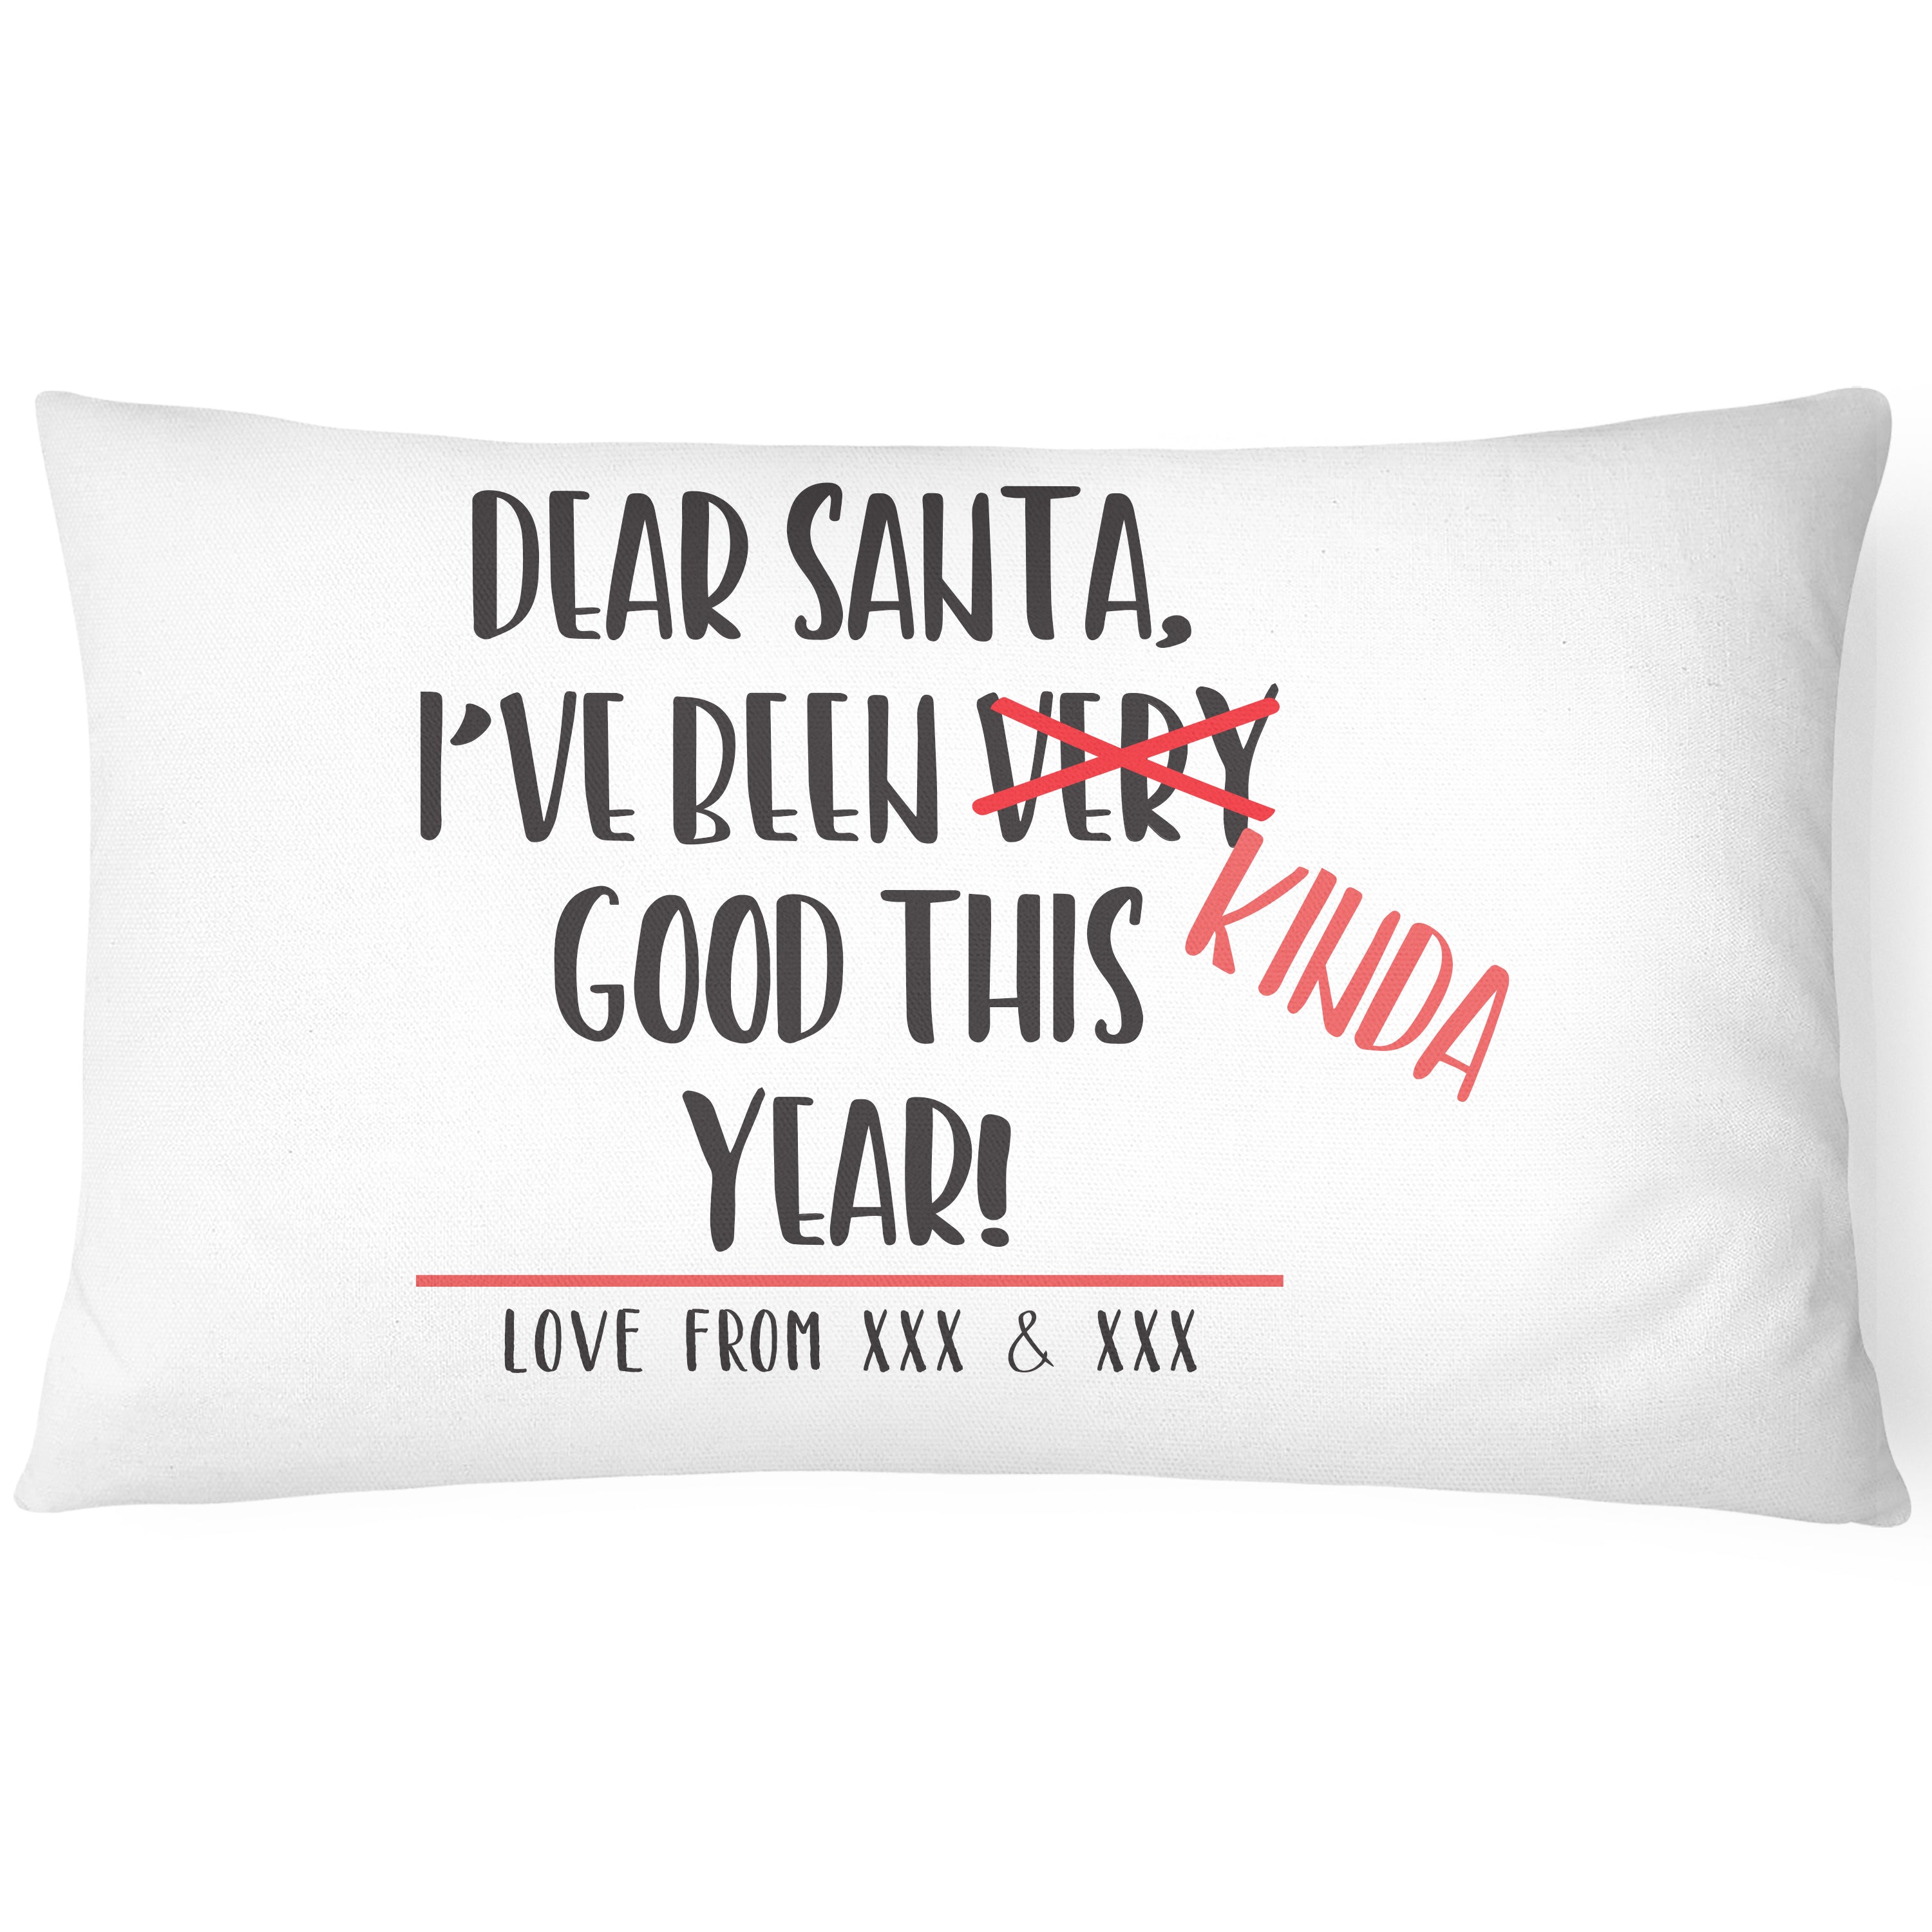 Personalised Christmas Pillowcase - Kinda' Good